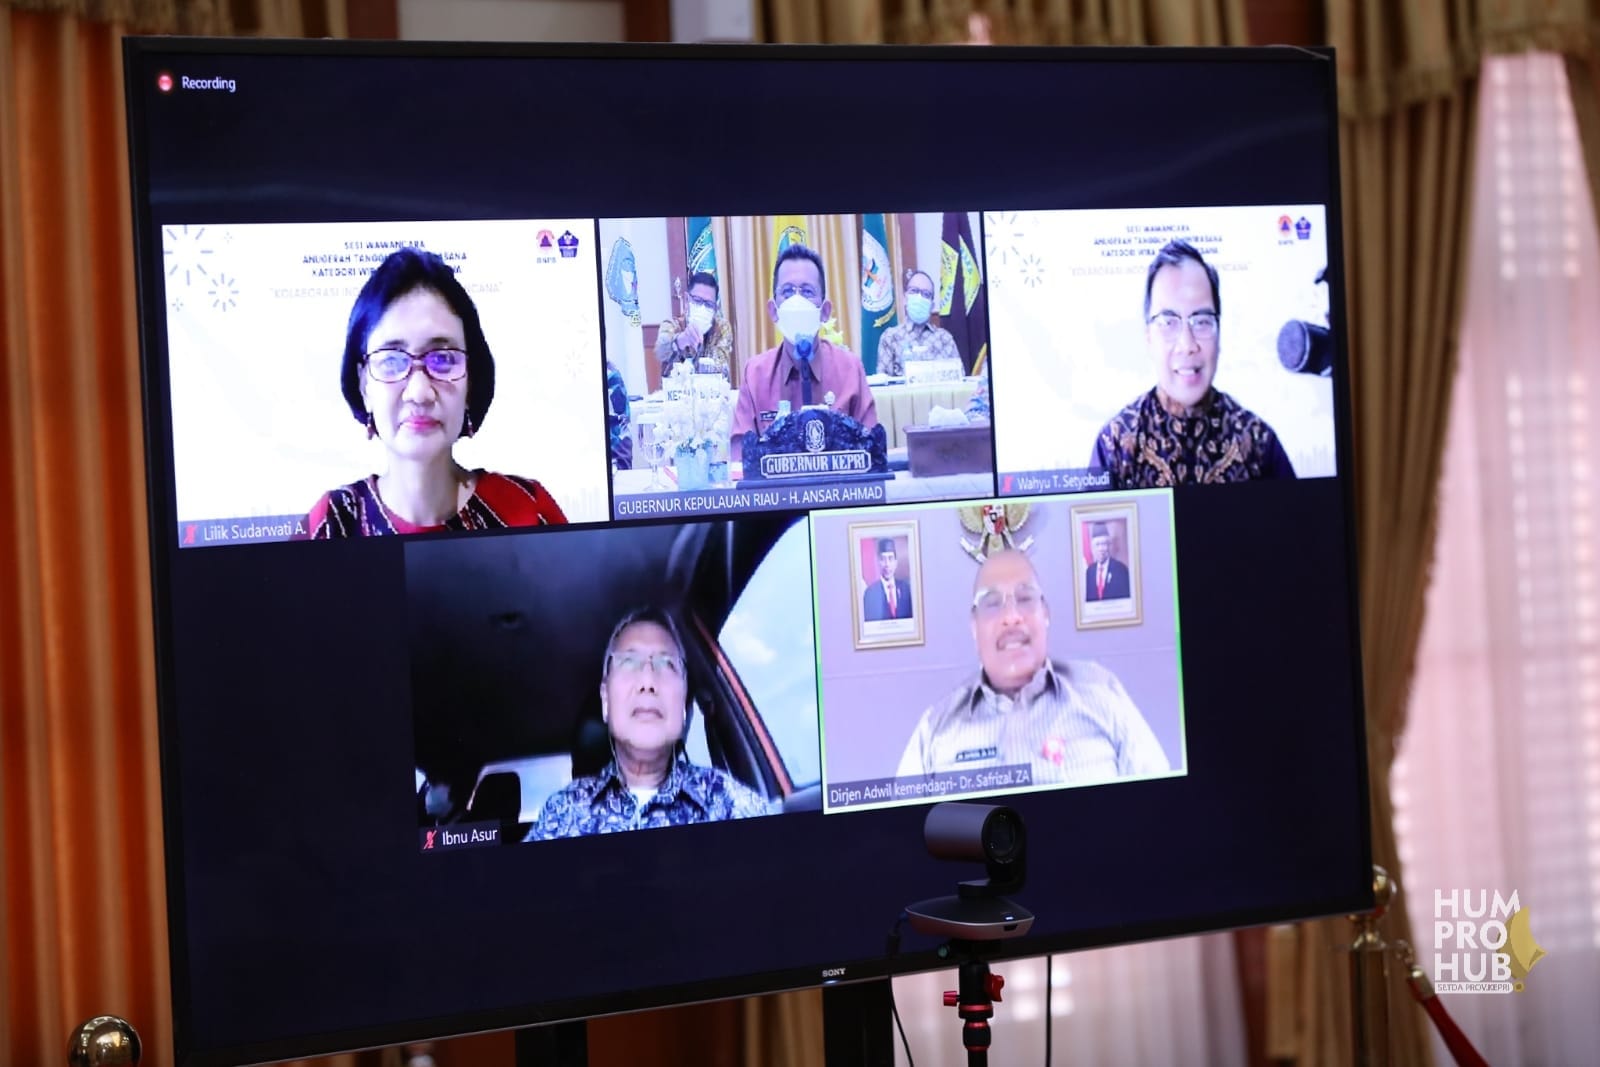 Gubernur Kepulauan Riau, Ansar Ahmad didampingi oleh Forkompinda Kepri menjalani sesi pemaparan dan wawancara secara virtual dari Gedung Daerah, Tanjungpinang, Jumat (29/10).